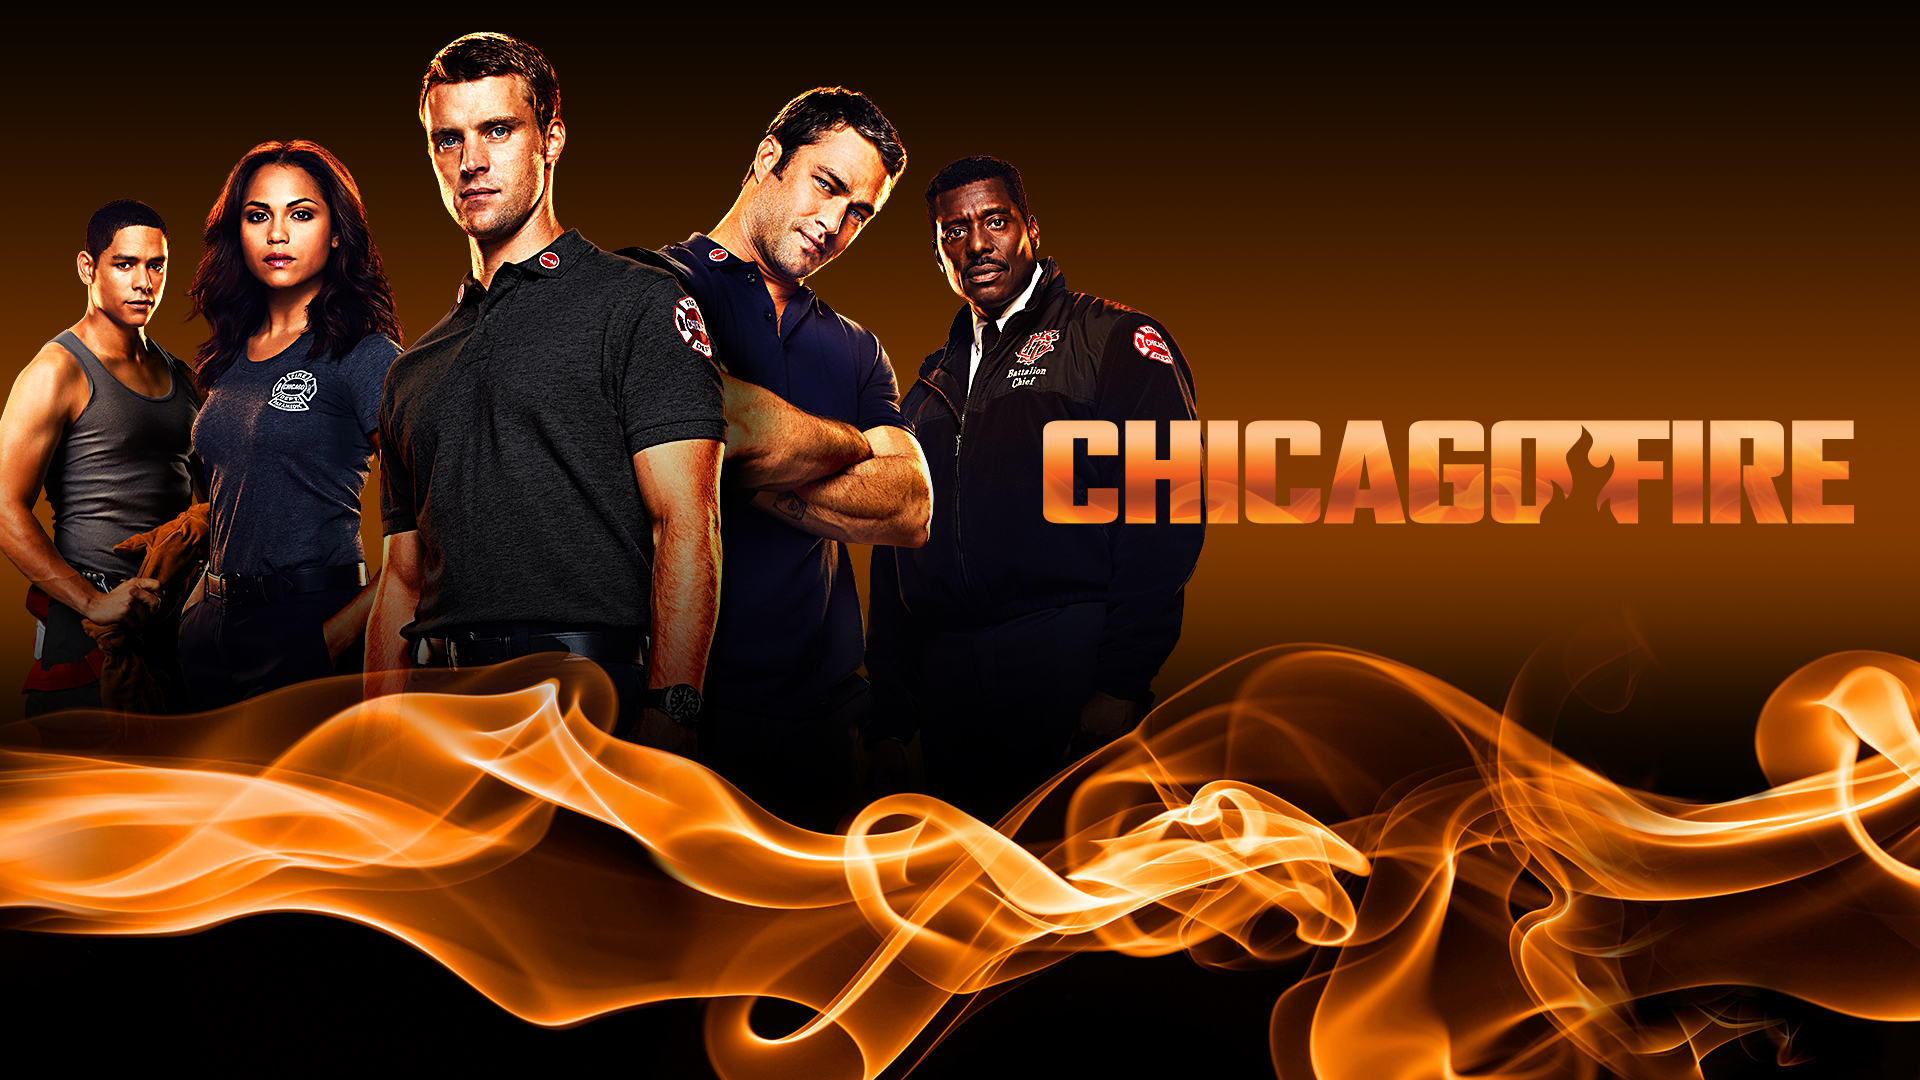 Big Chicago Fire Background Wallpaper